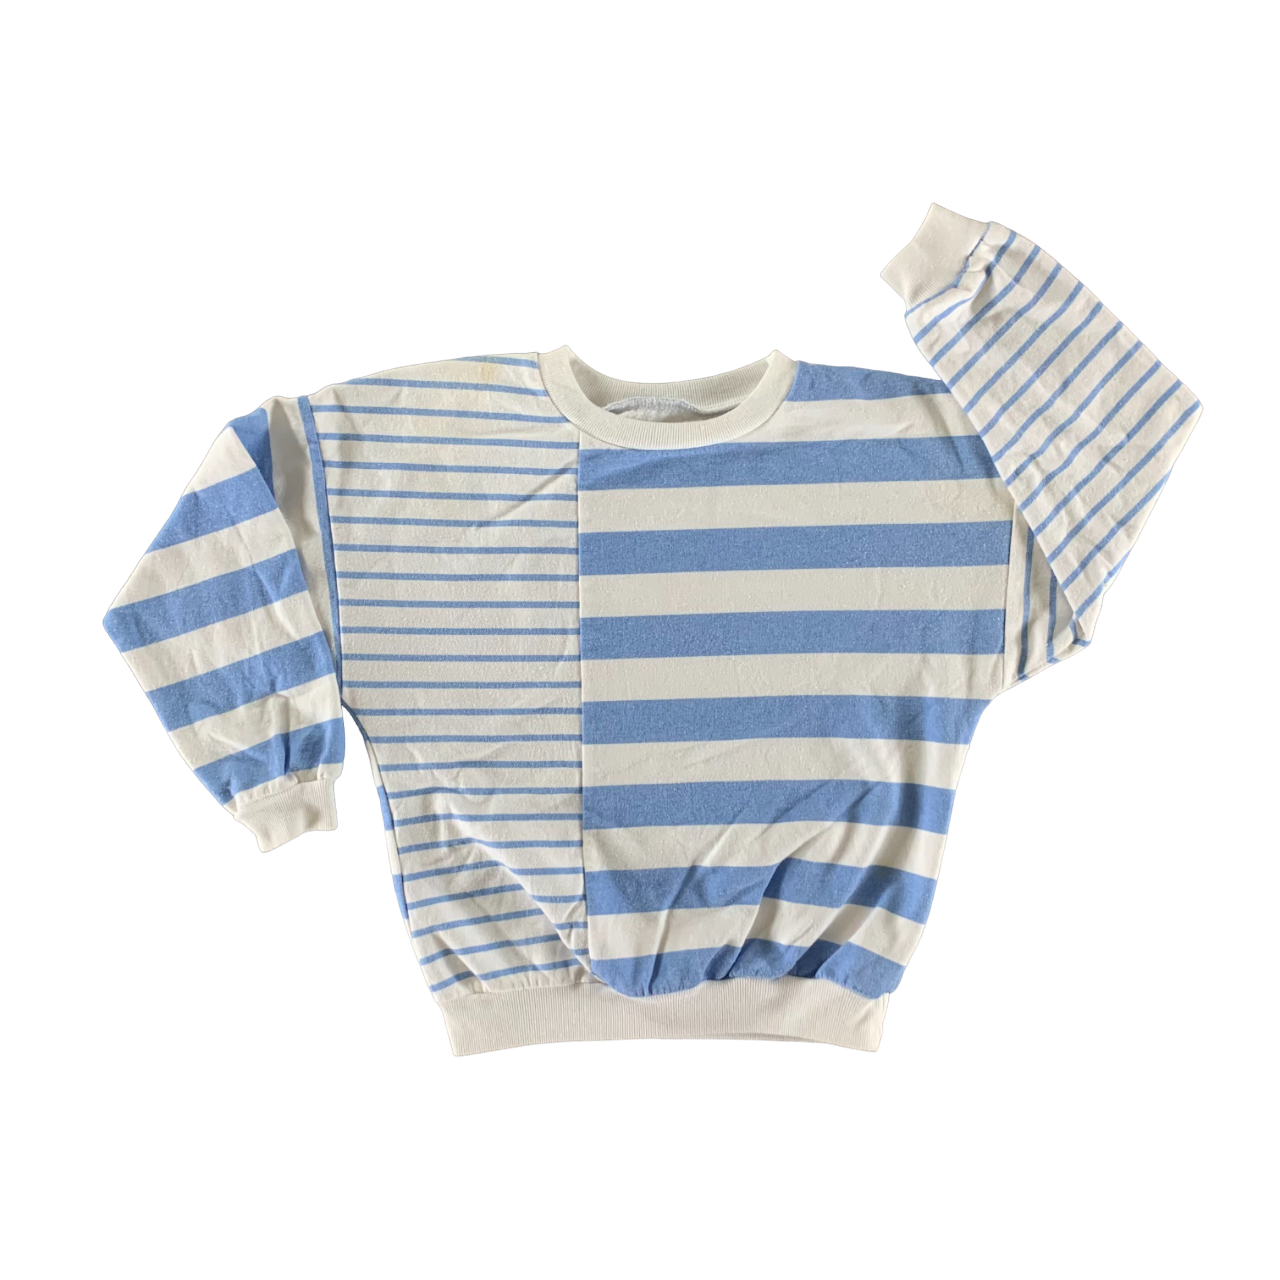 Vintage 1990s Blue and White Striped Sweatshirt size Medium